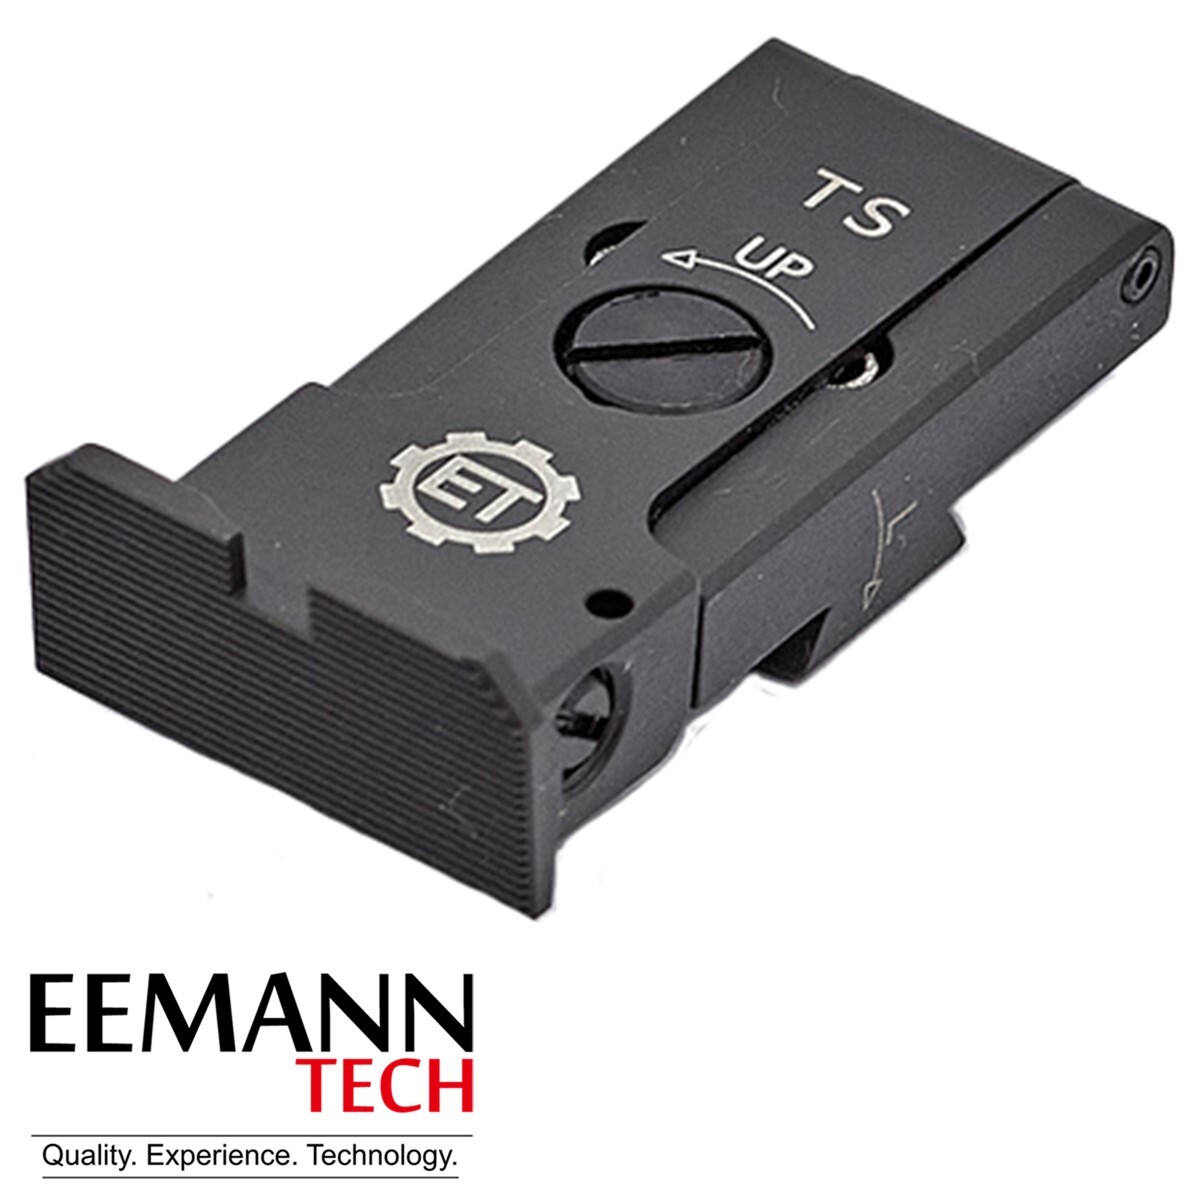 Eemann Tech Cz 75 Ts Ts 2 Adjustable Rear Sight